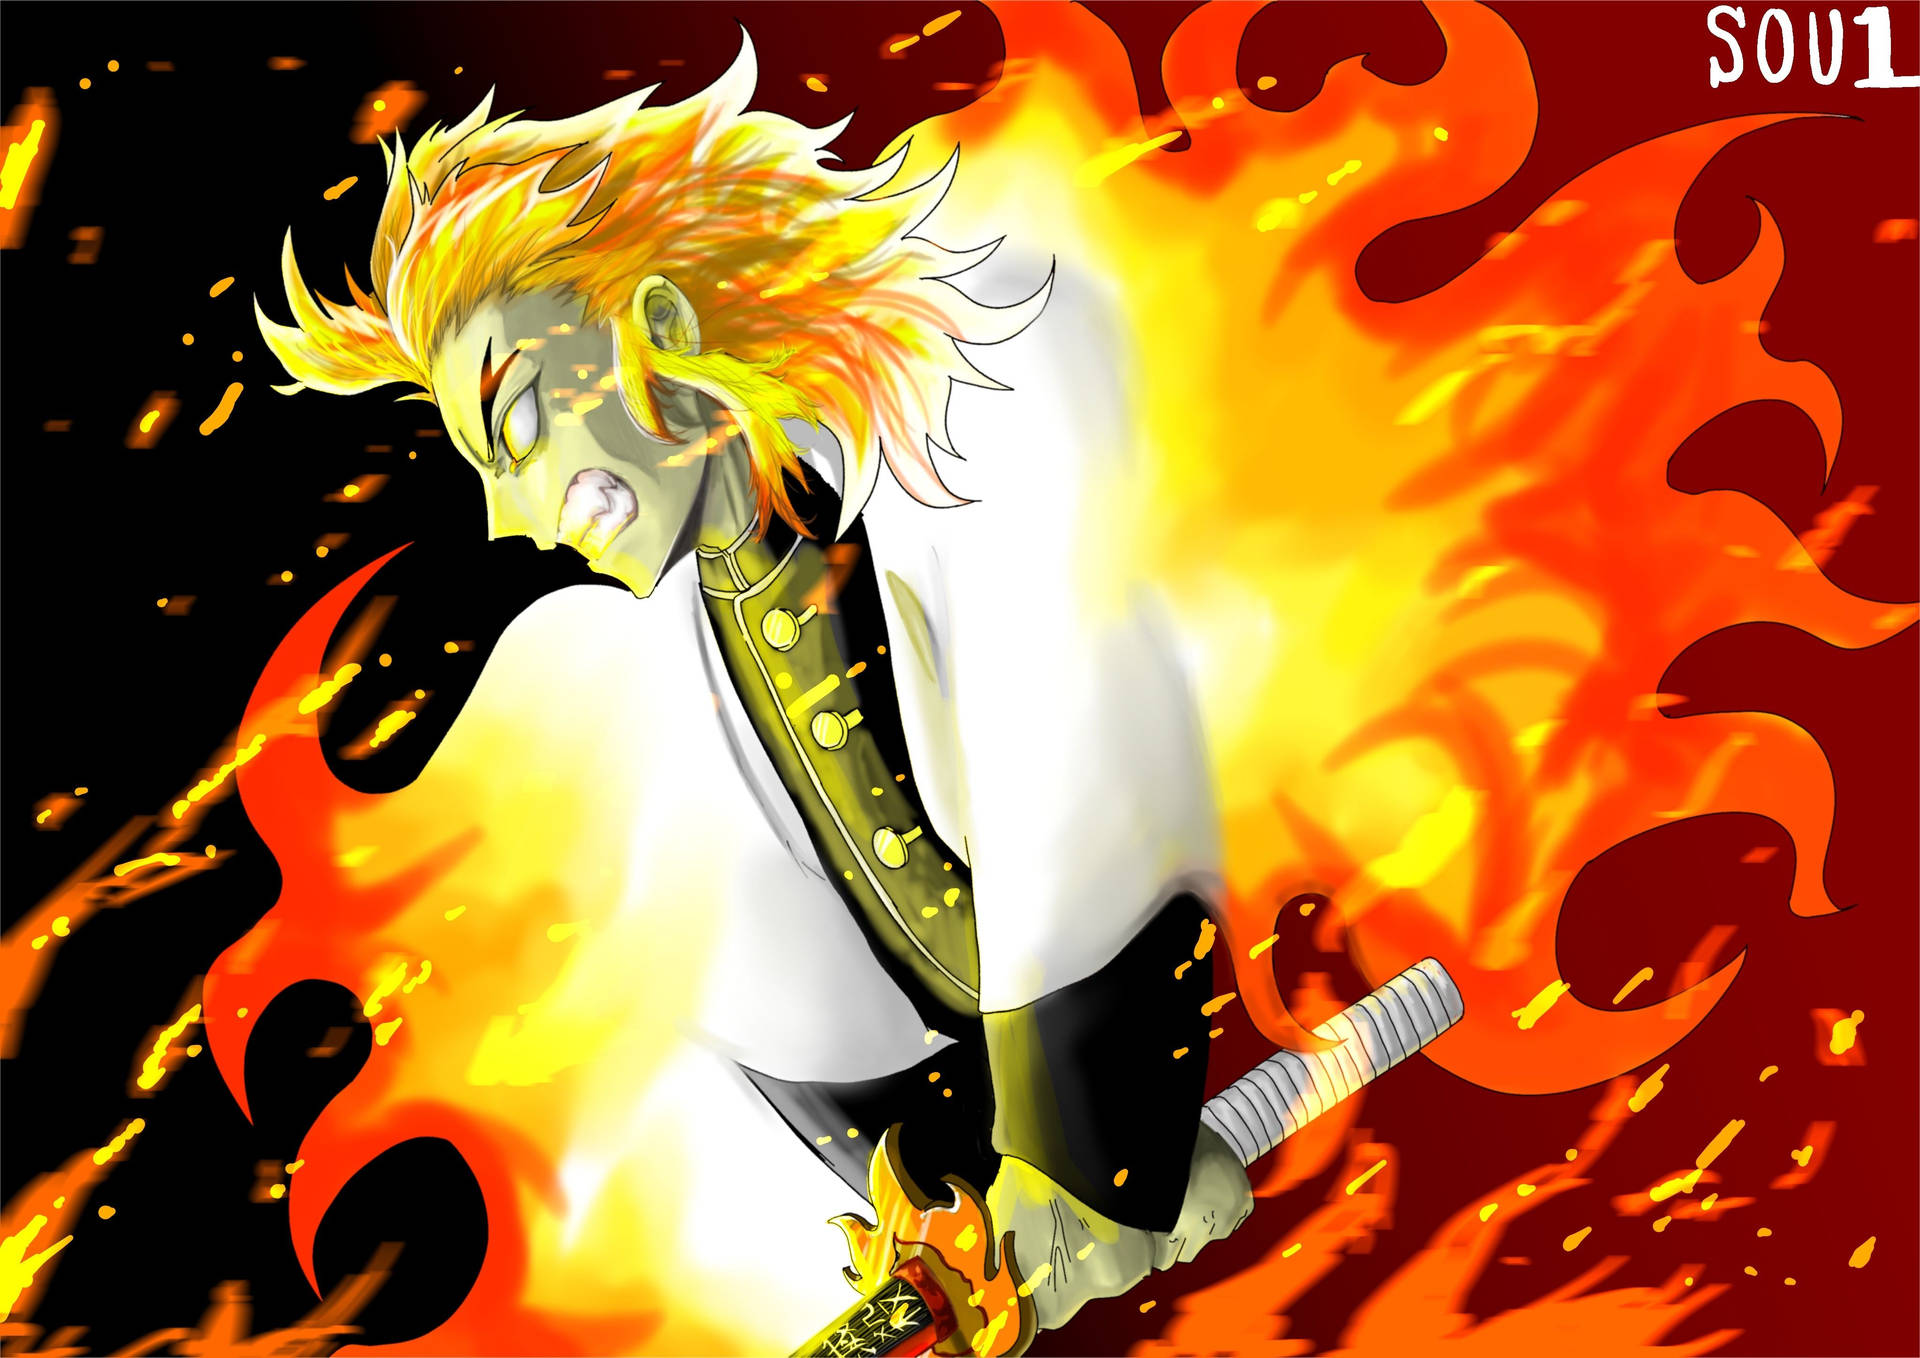 Kyoujurou Rengoku in rage and fire wallpaper.